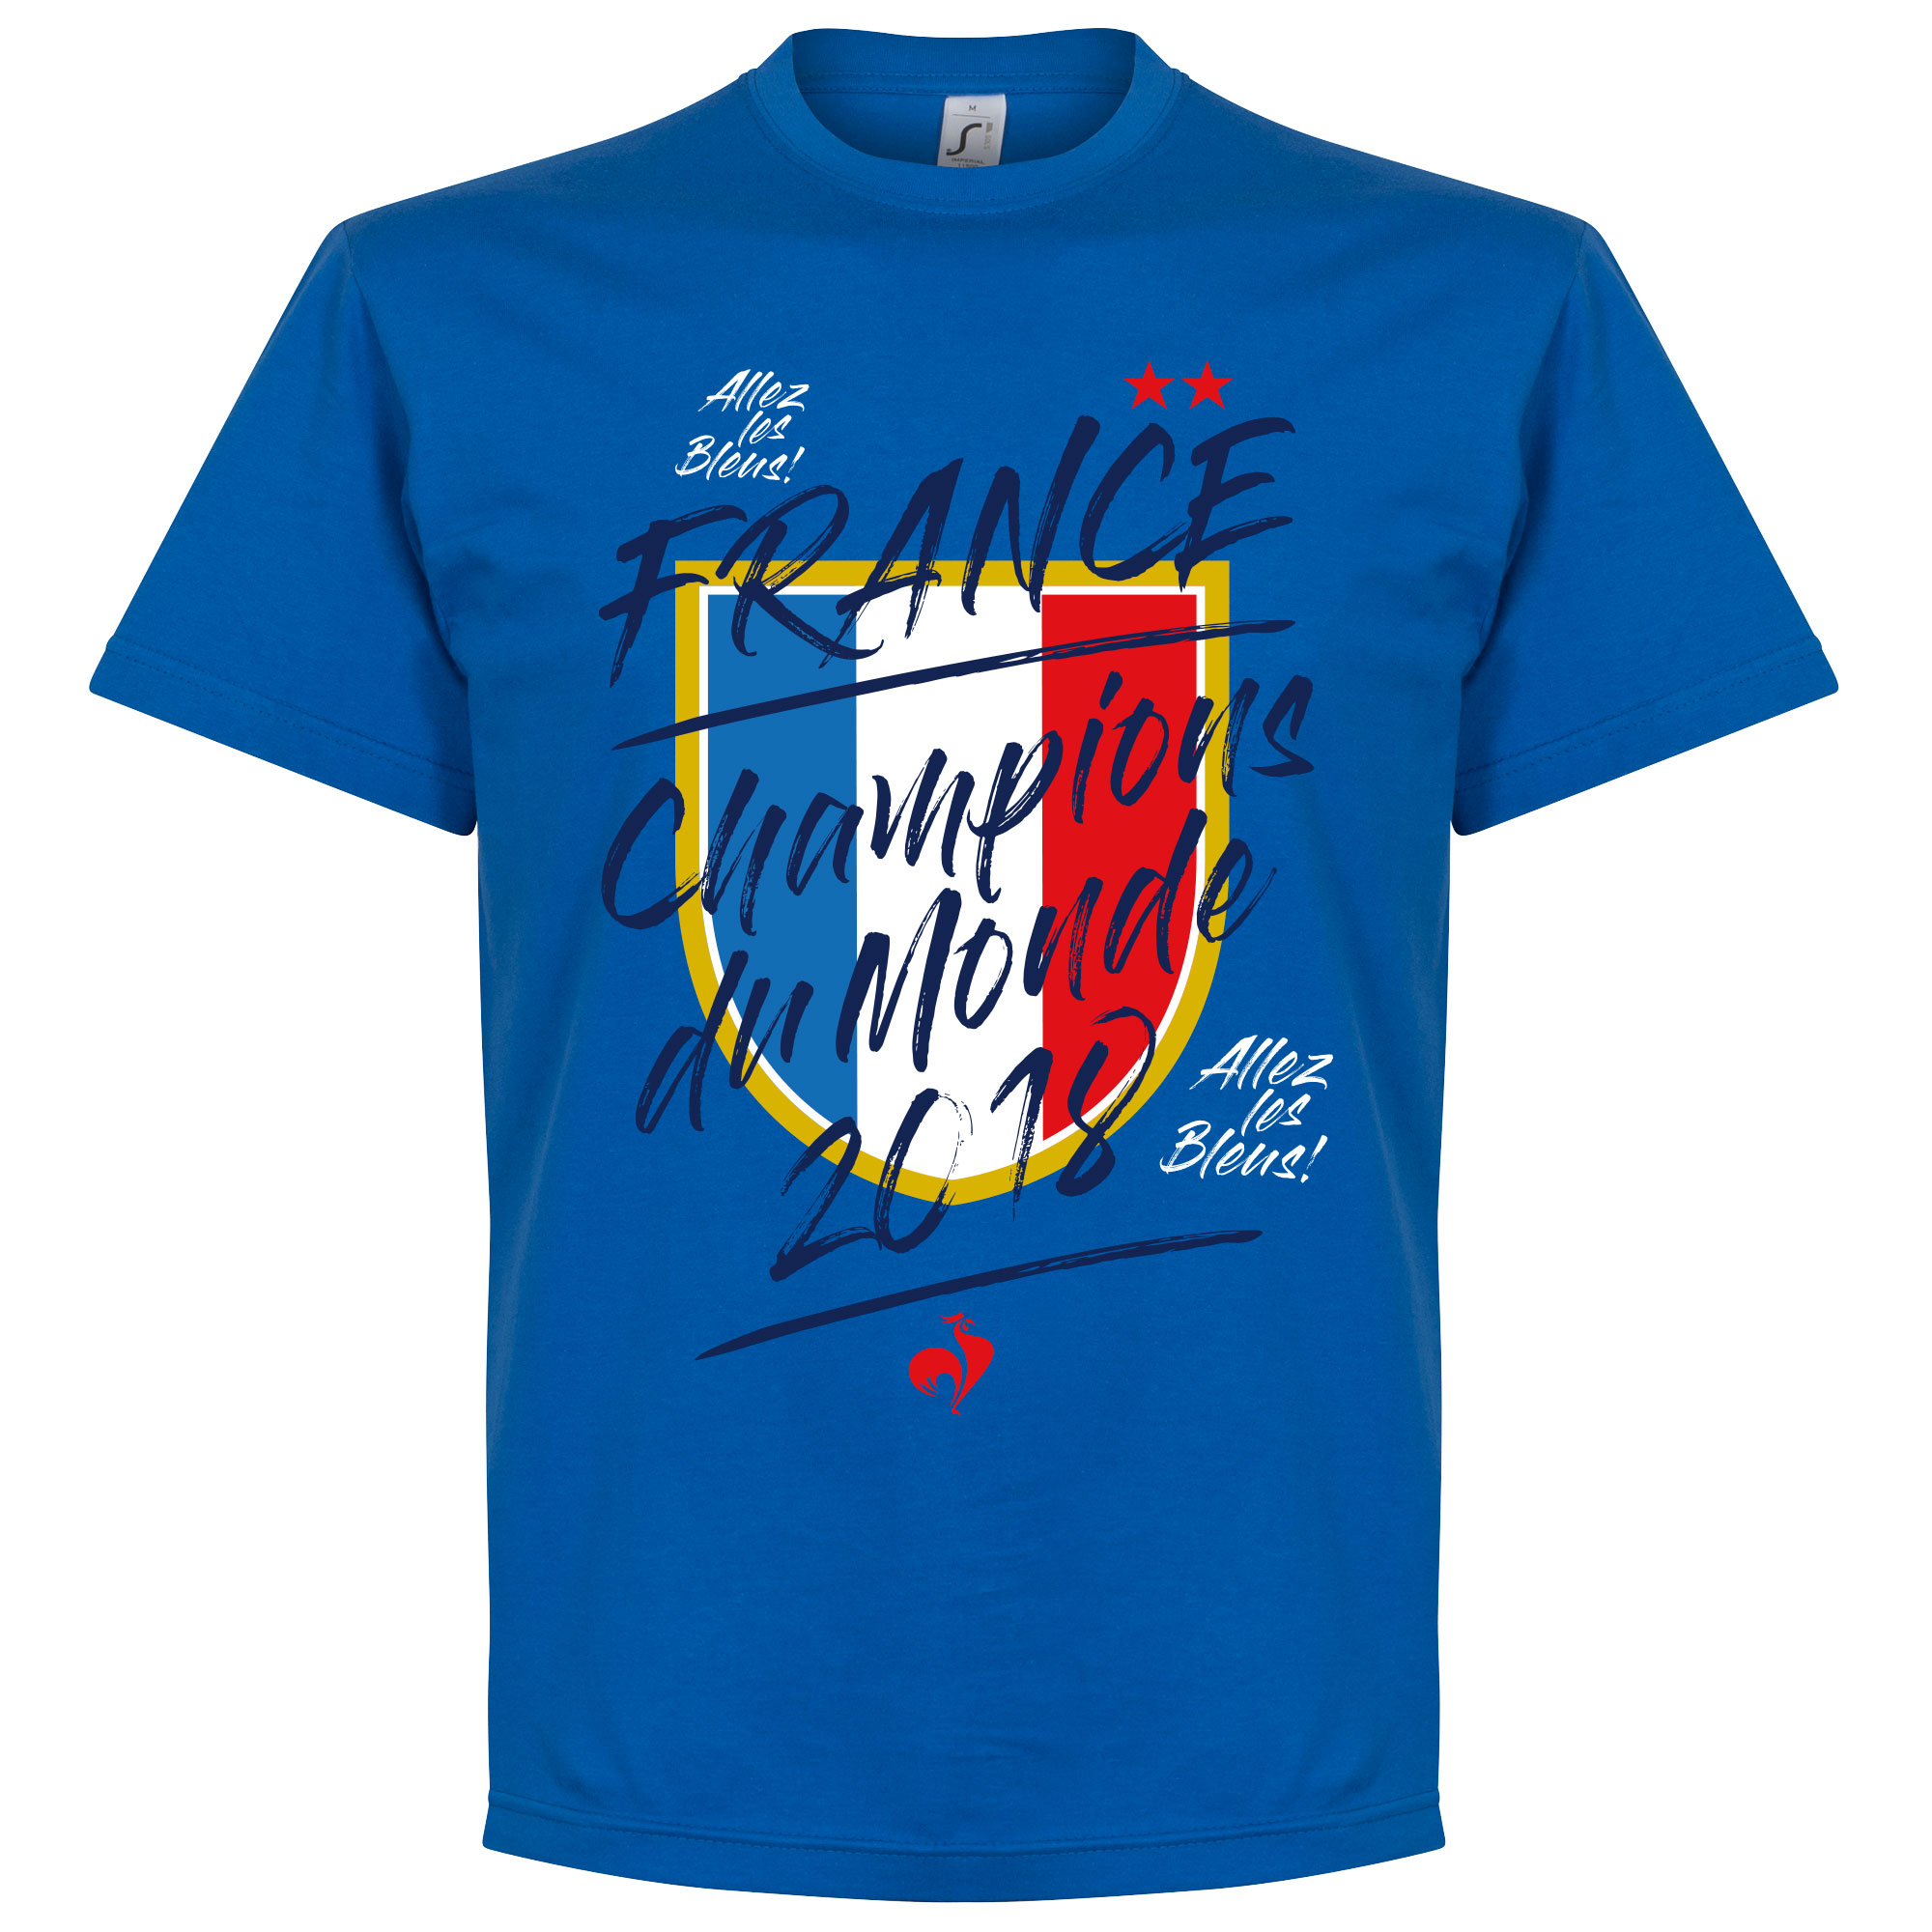 Frankrijk Champion Du Monde 2018 T-Shirt - Blauw - XXXL